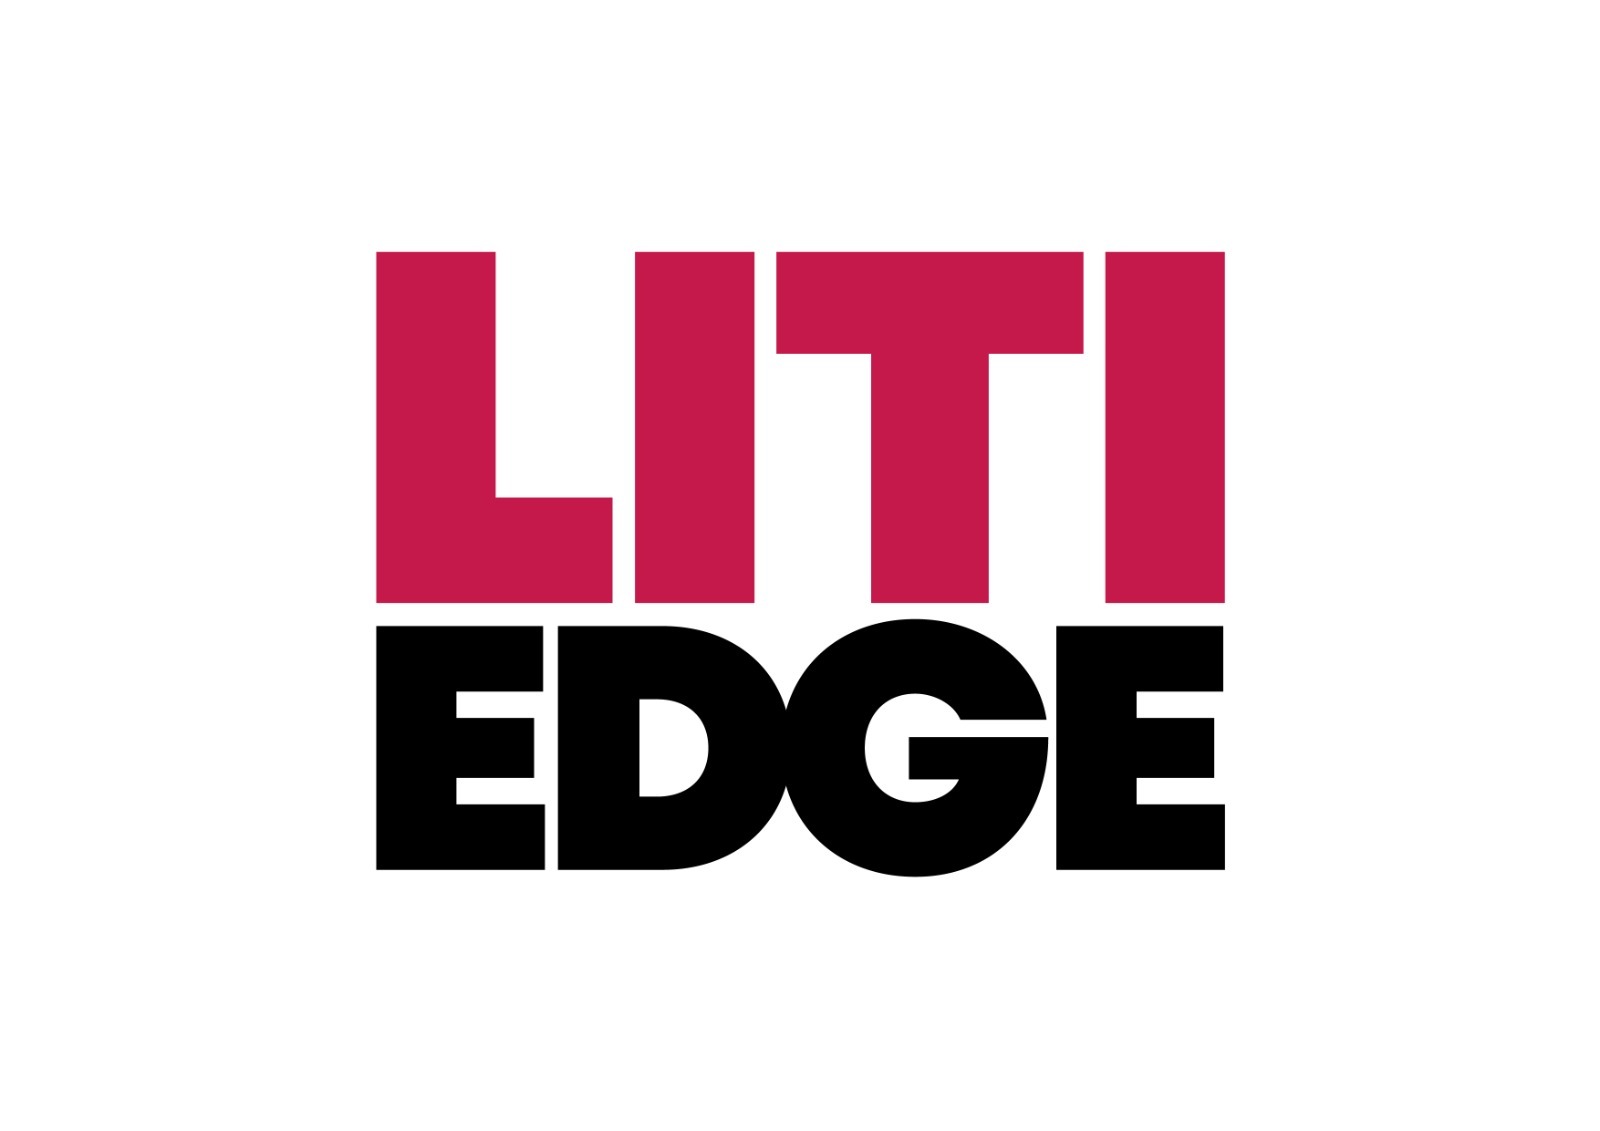 Litigation Edge